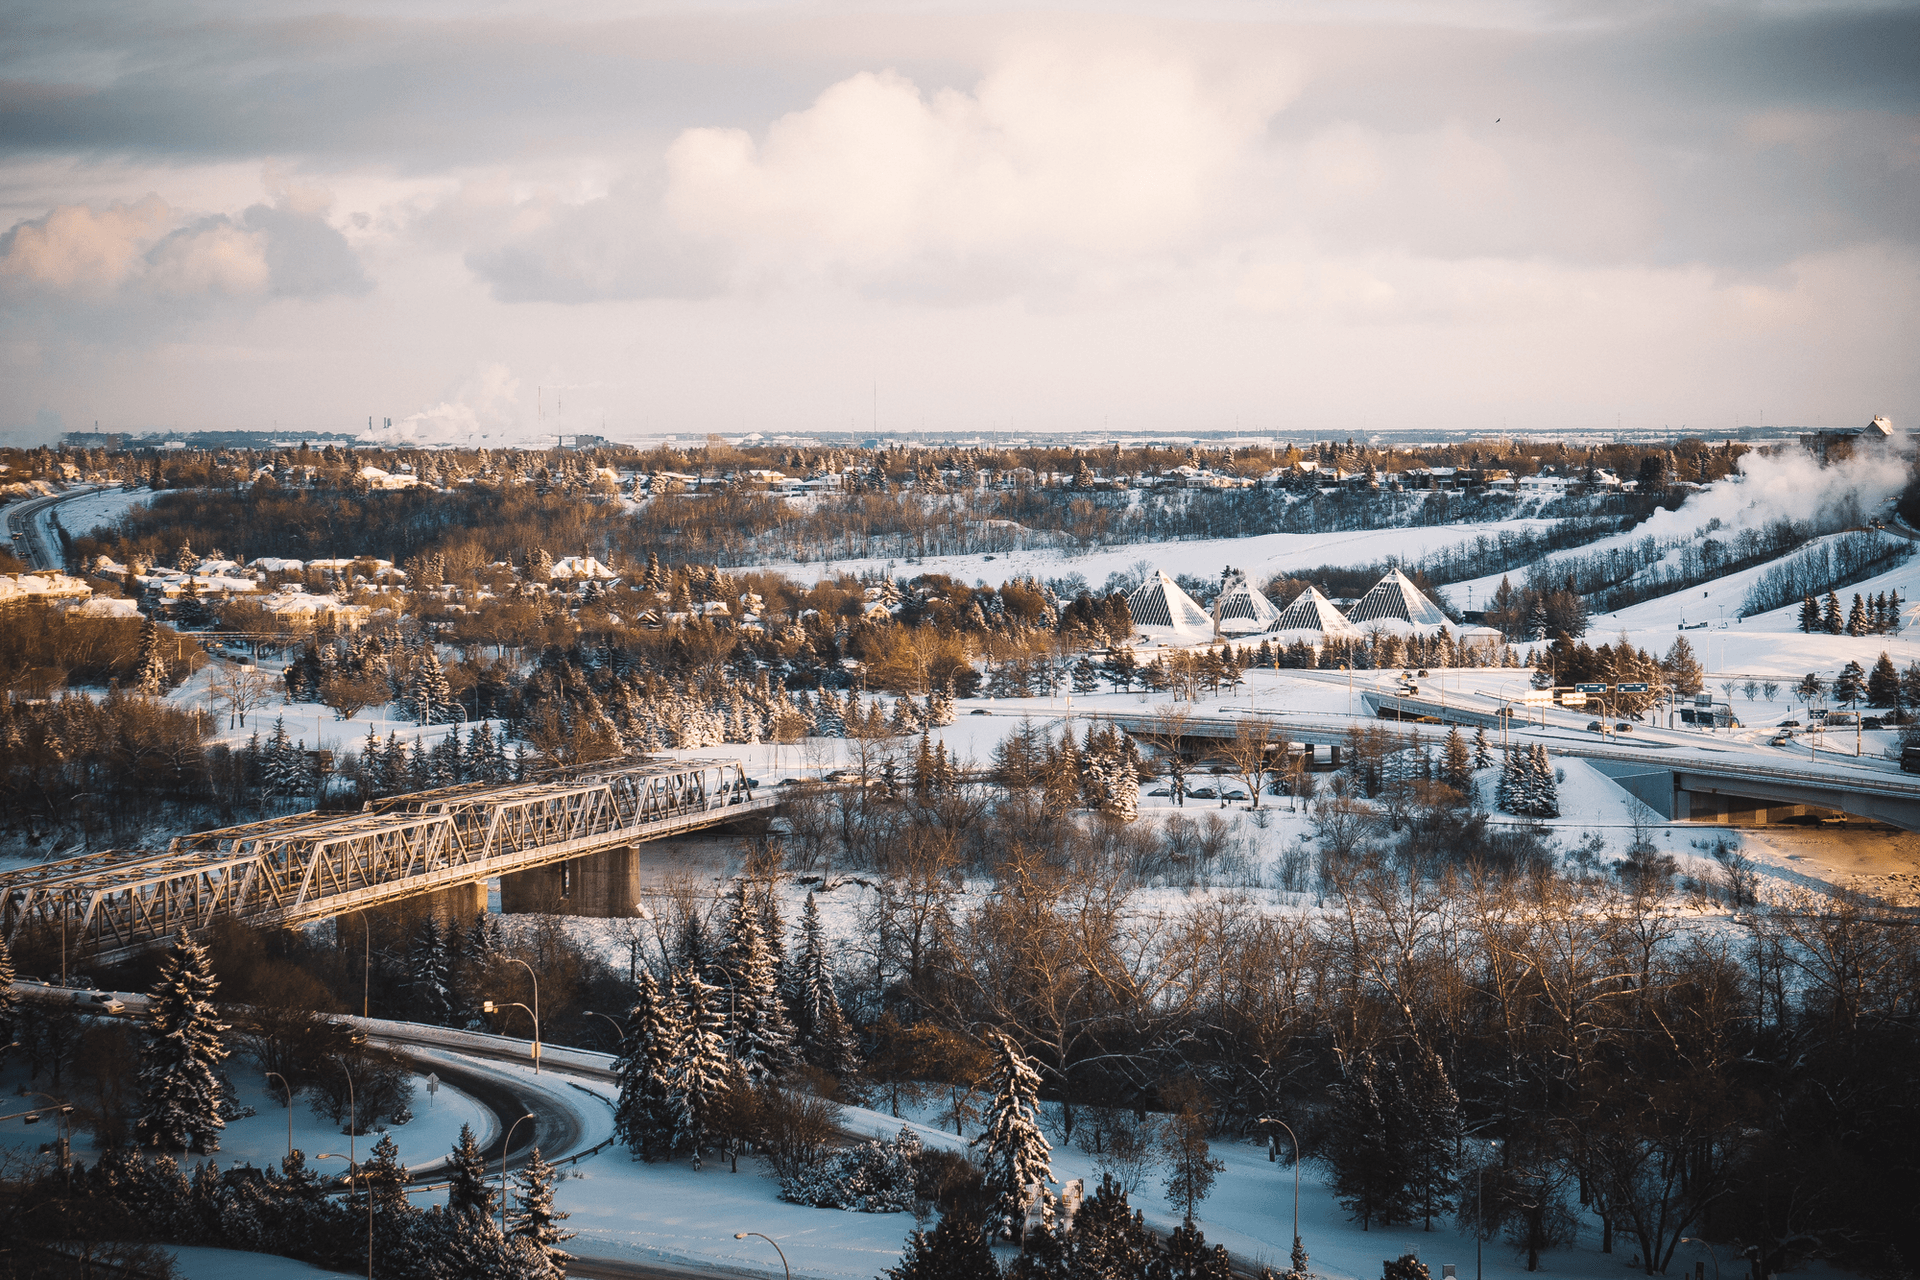 Winter across Edmonton